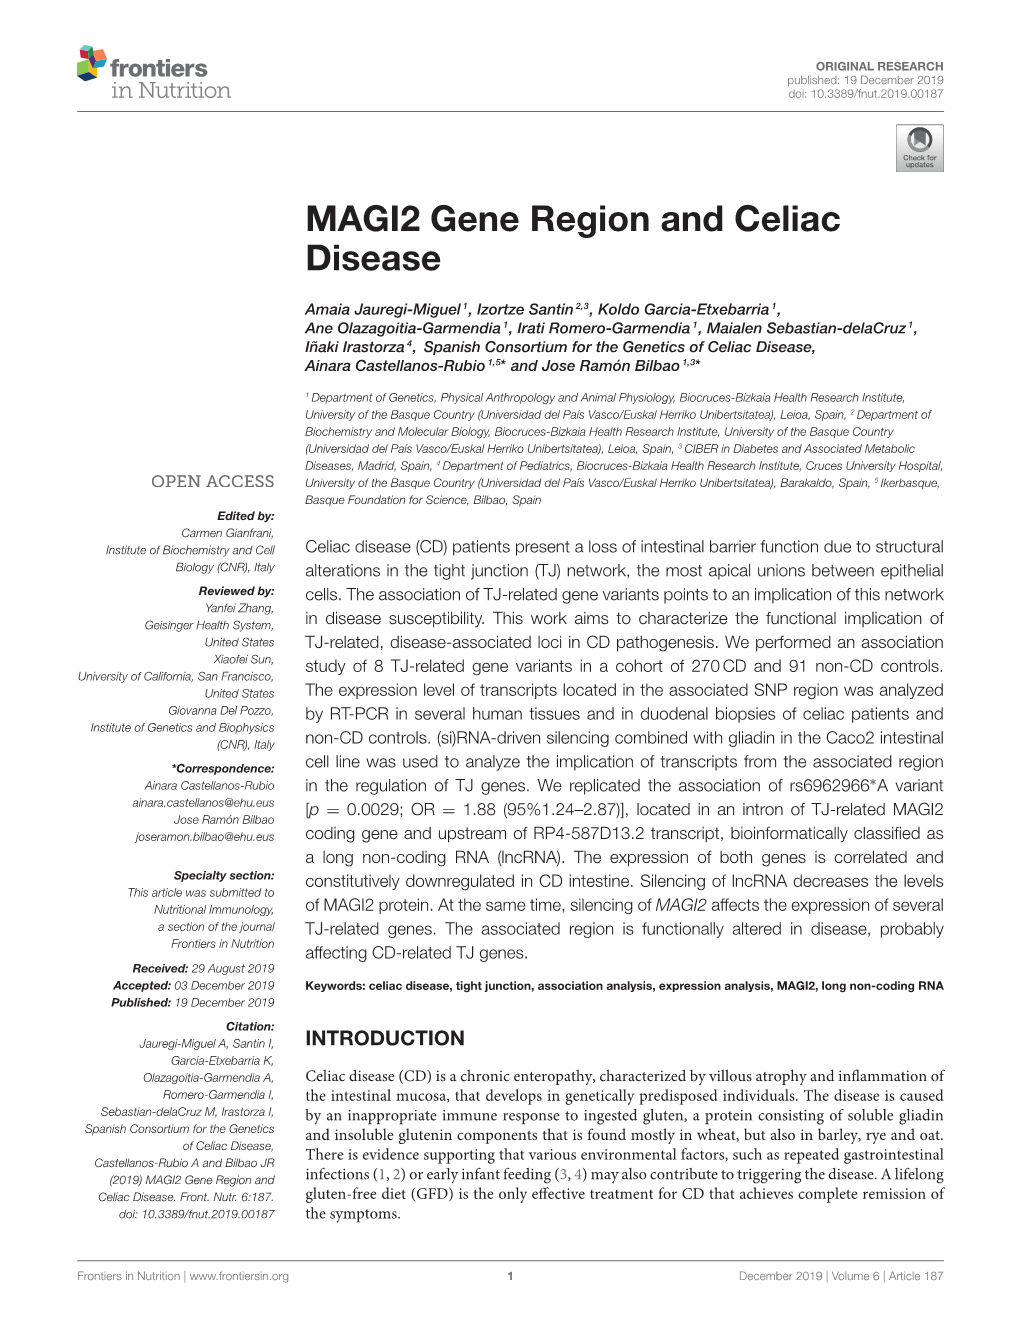 MAGI2 Gene Region and Celiac Disease